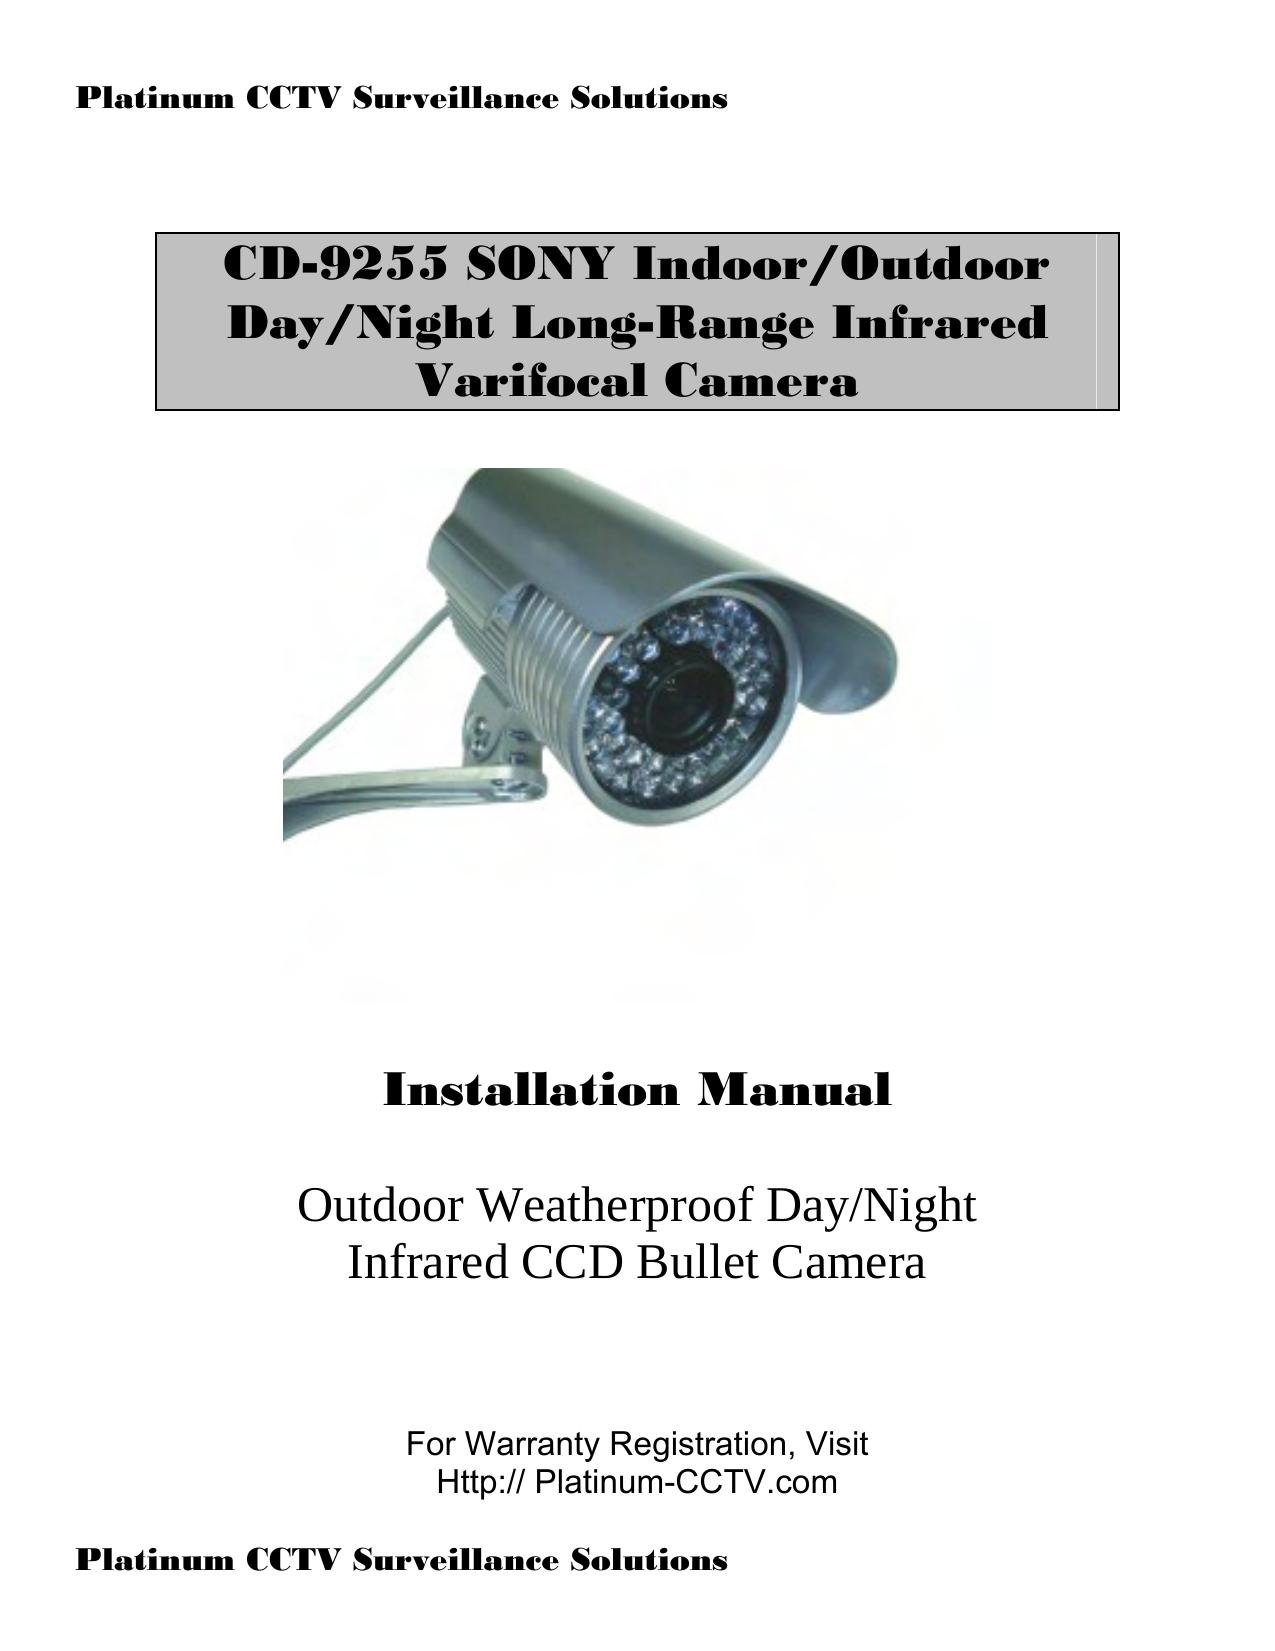 Sony CD-9255 Security Camera User Manual